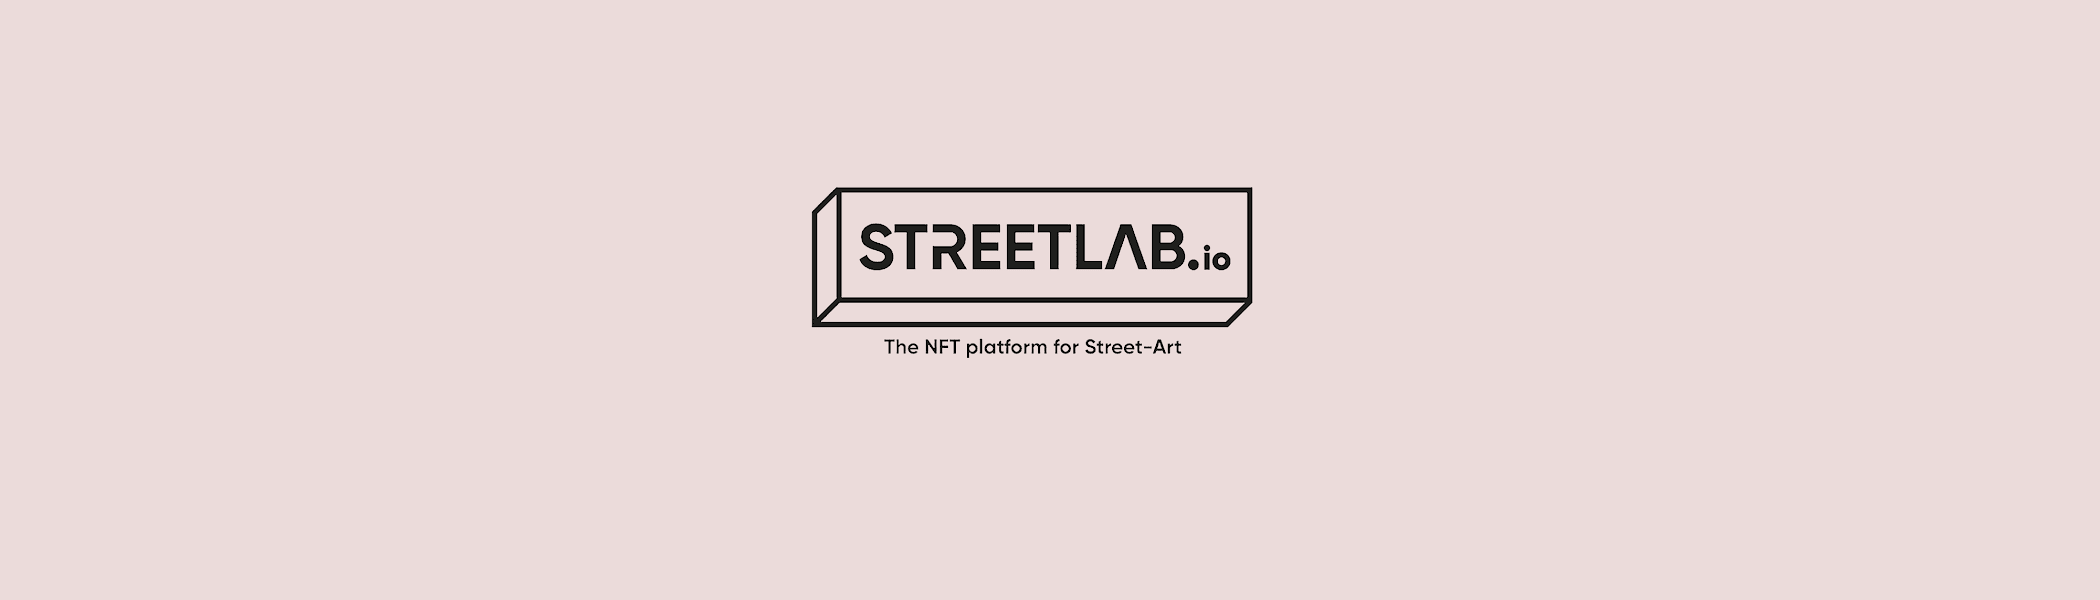 Streetlab_io banner